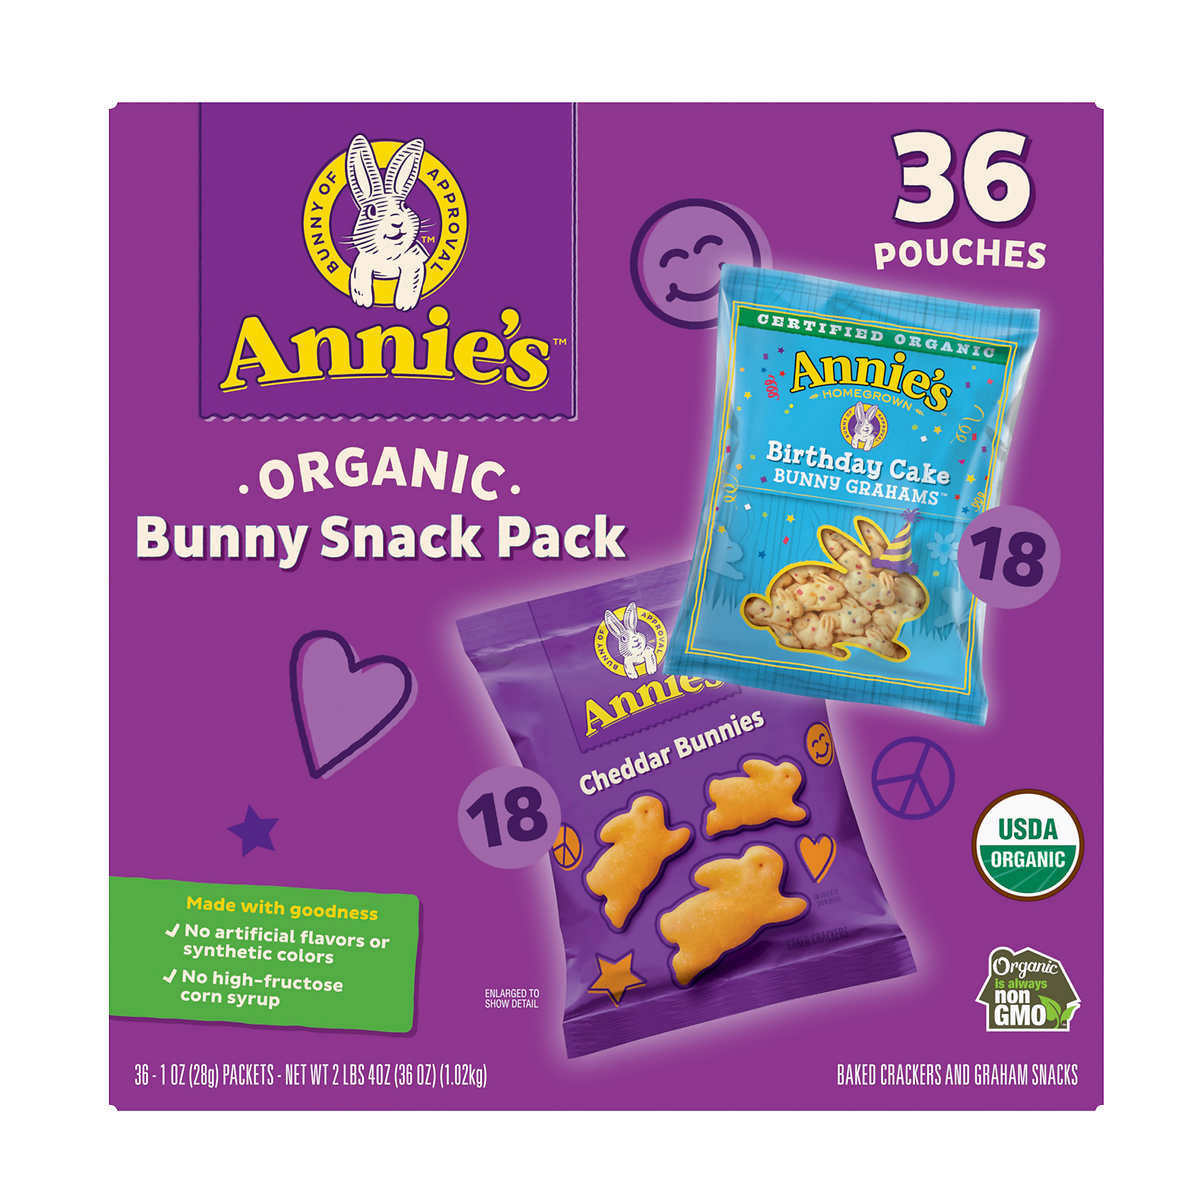 Organic snacks on sale